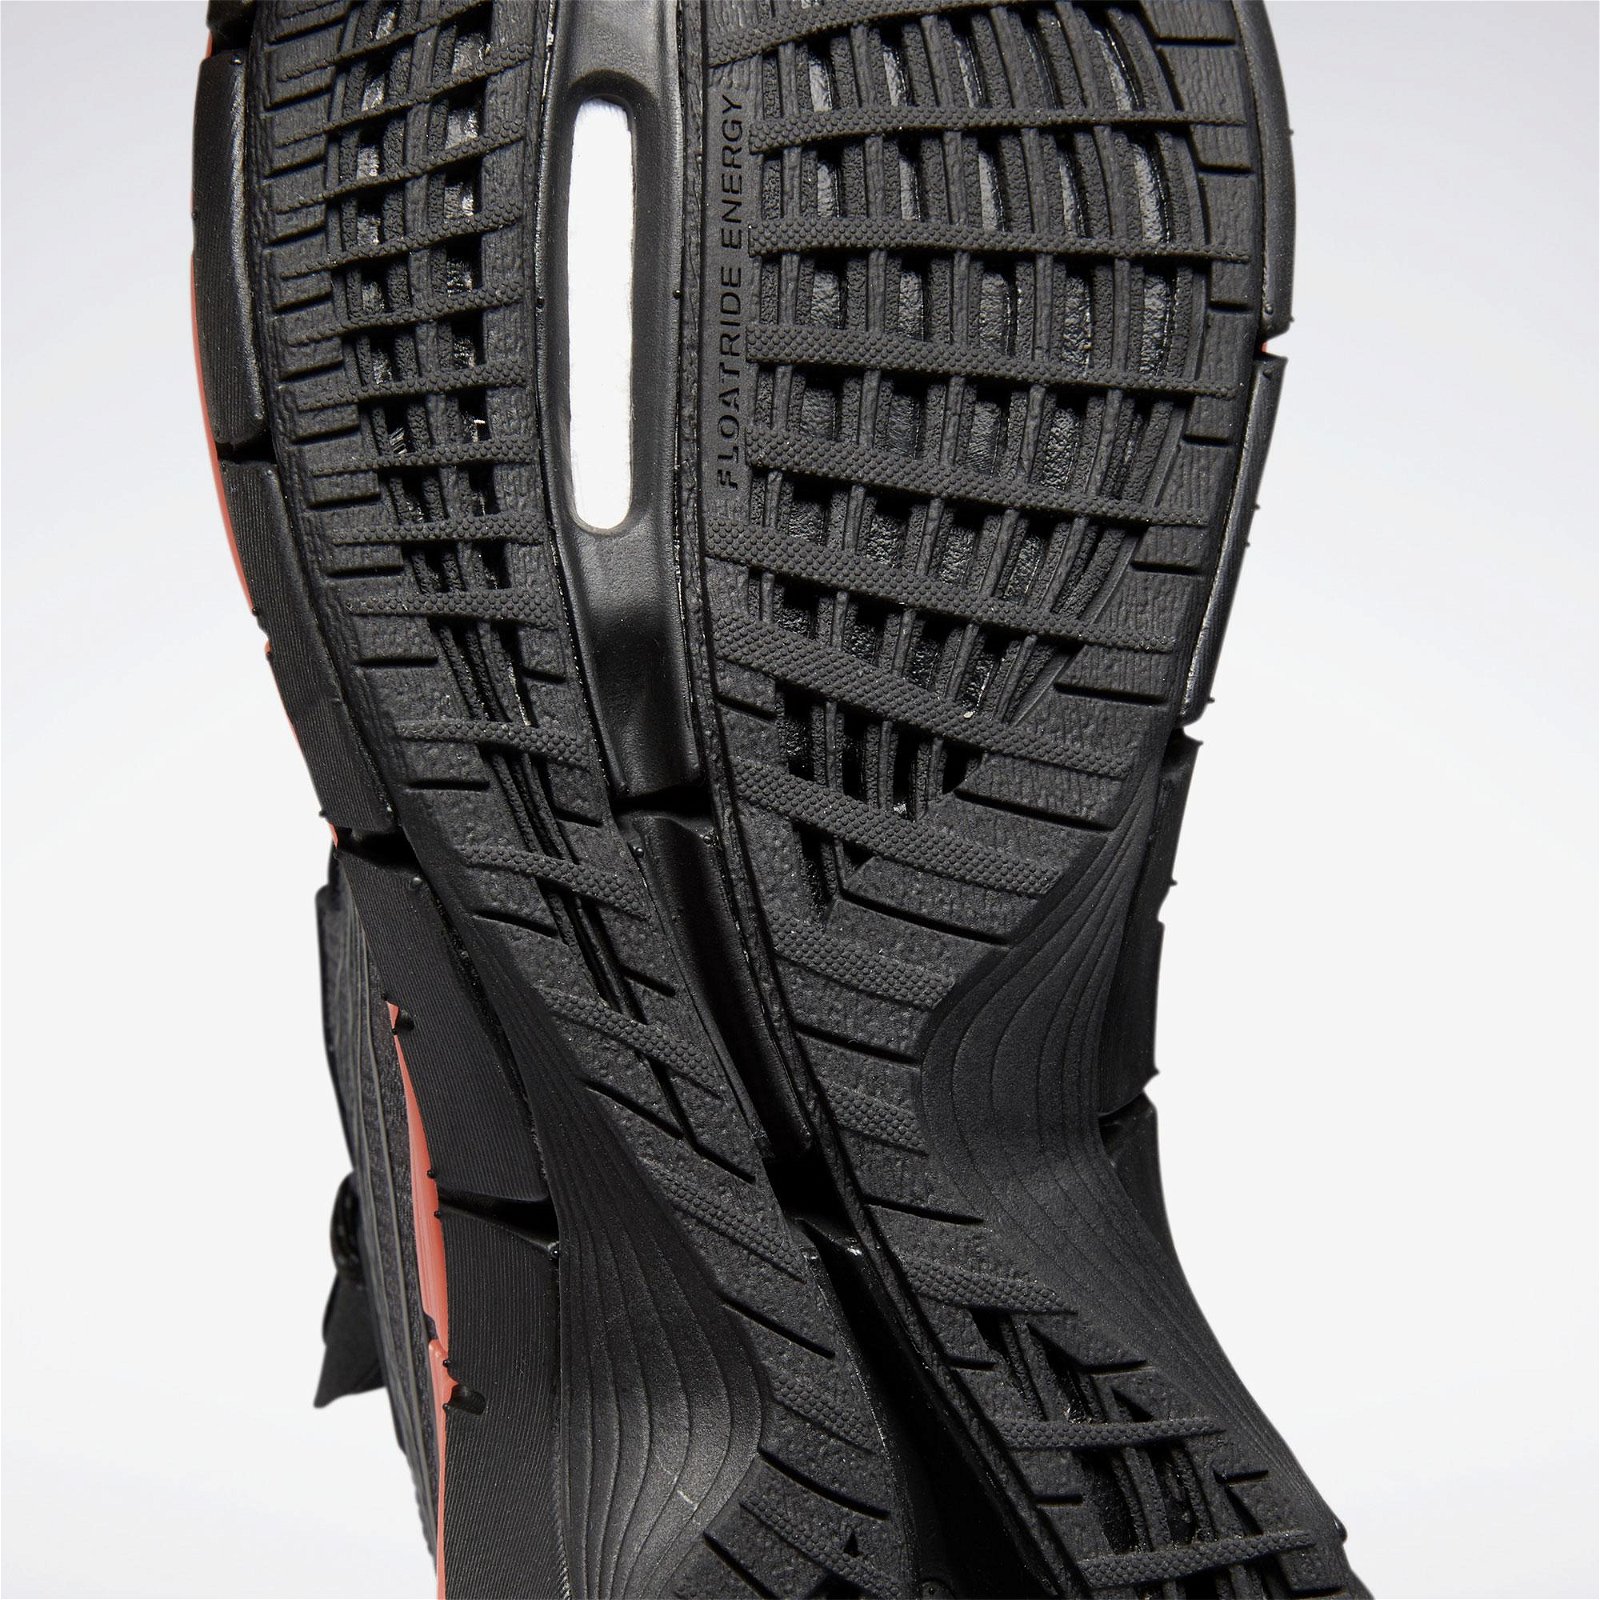 Reebok Zig Kinetica II Siyah Spor Ayakkabı